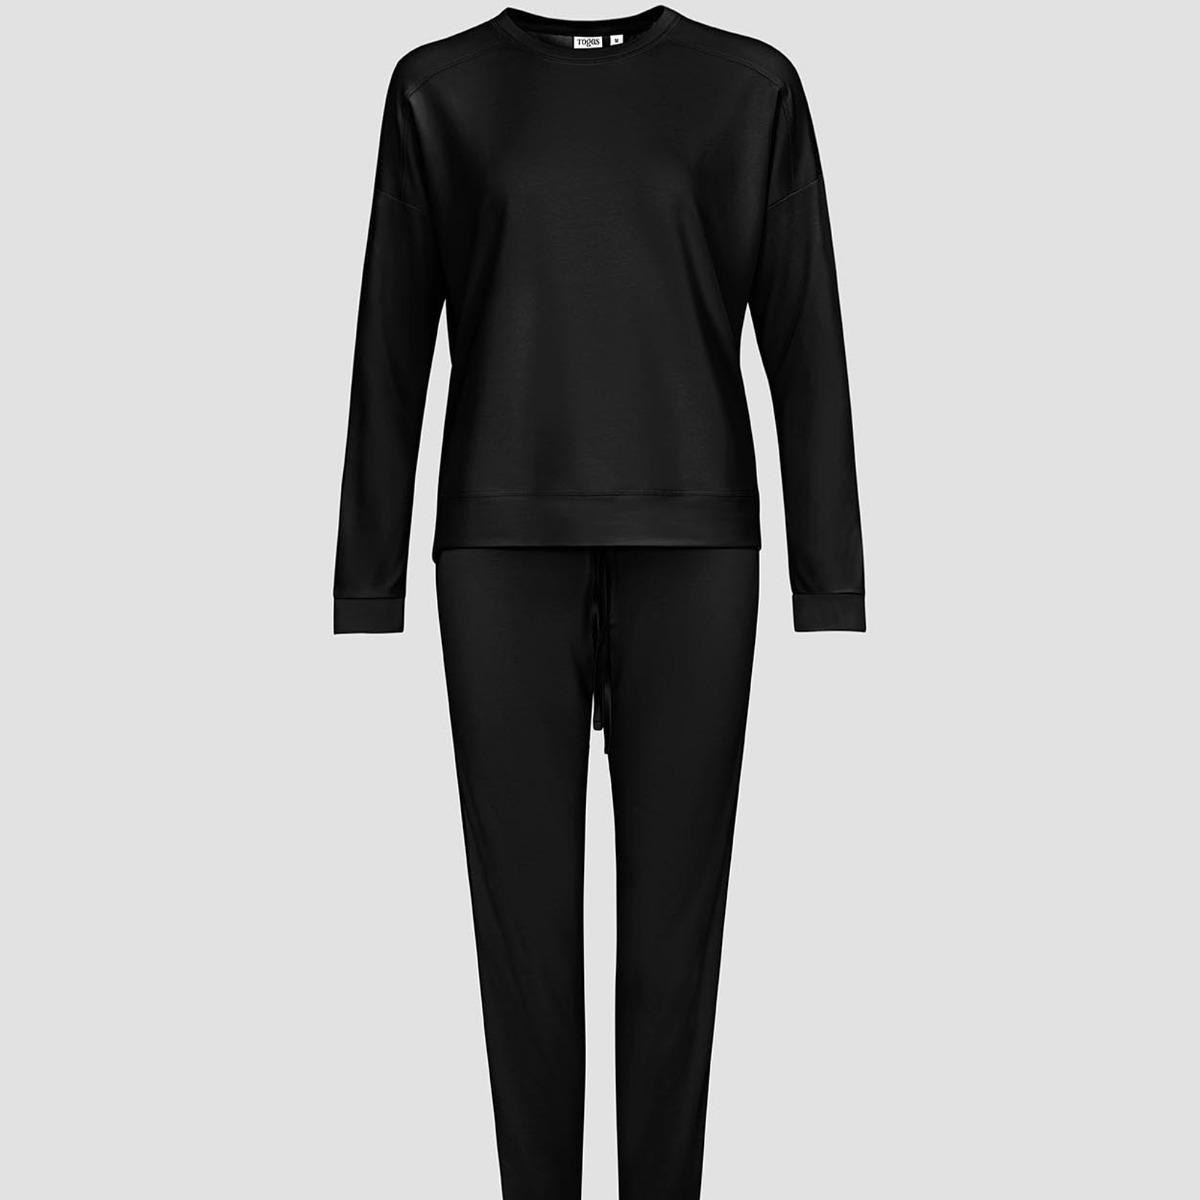 Женская пижама Togas Рене чёрная S (44), цвет чёрный, размер 44